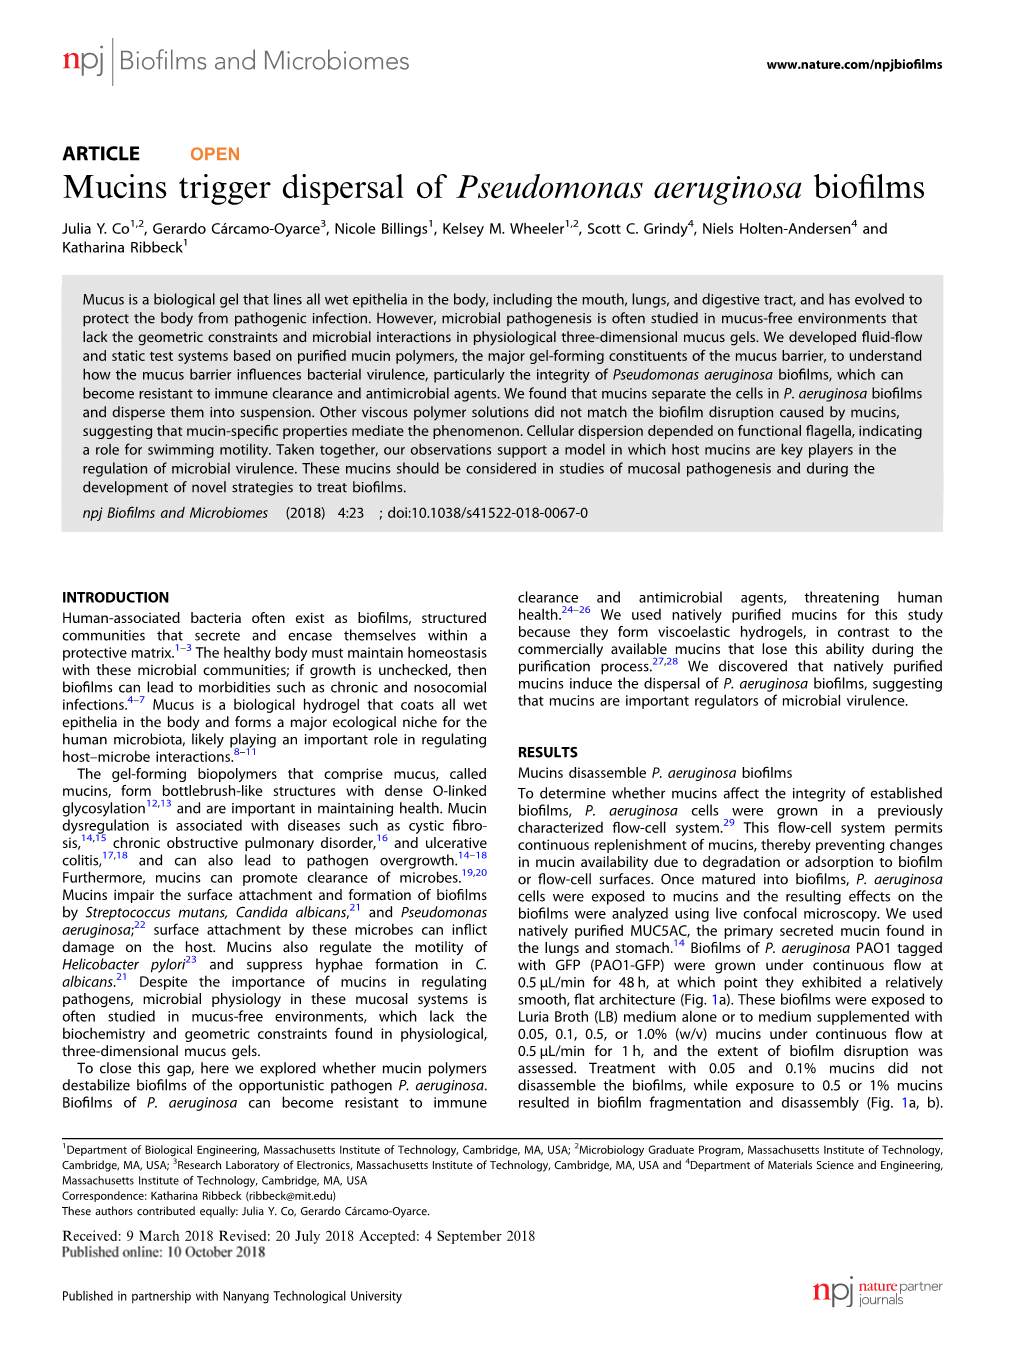 Mucins Trigger Dispersal of Pseudomonas Aeruginosa Biofilms